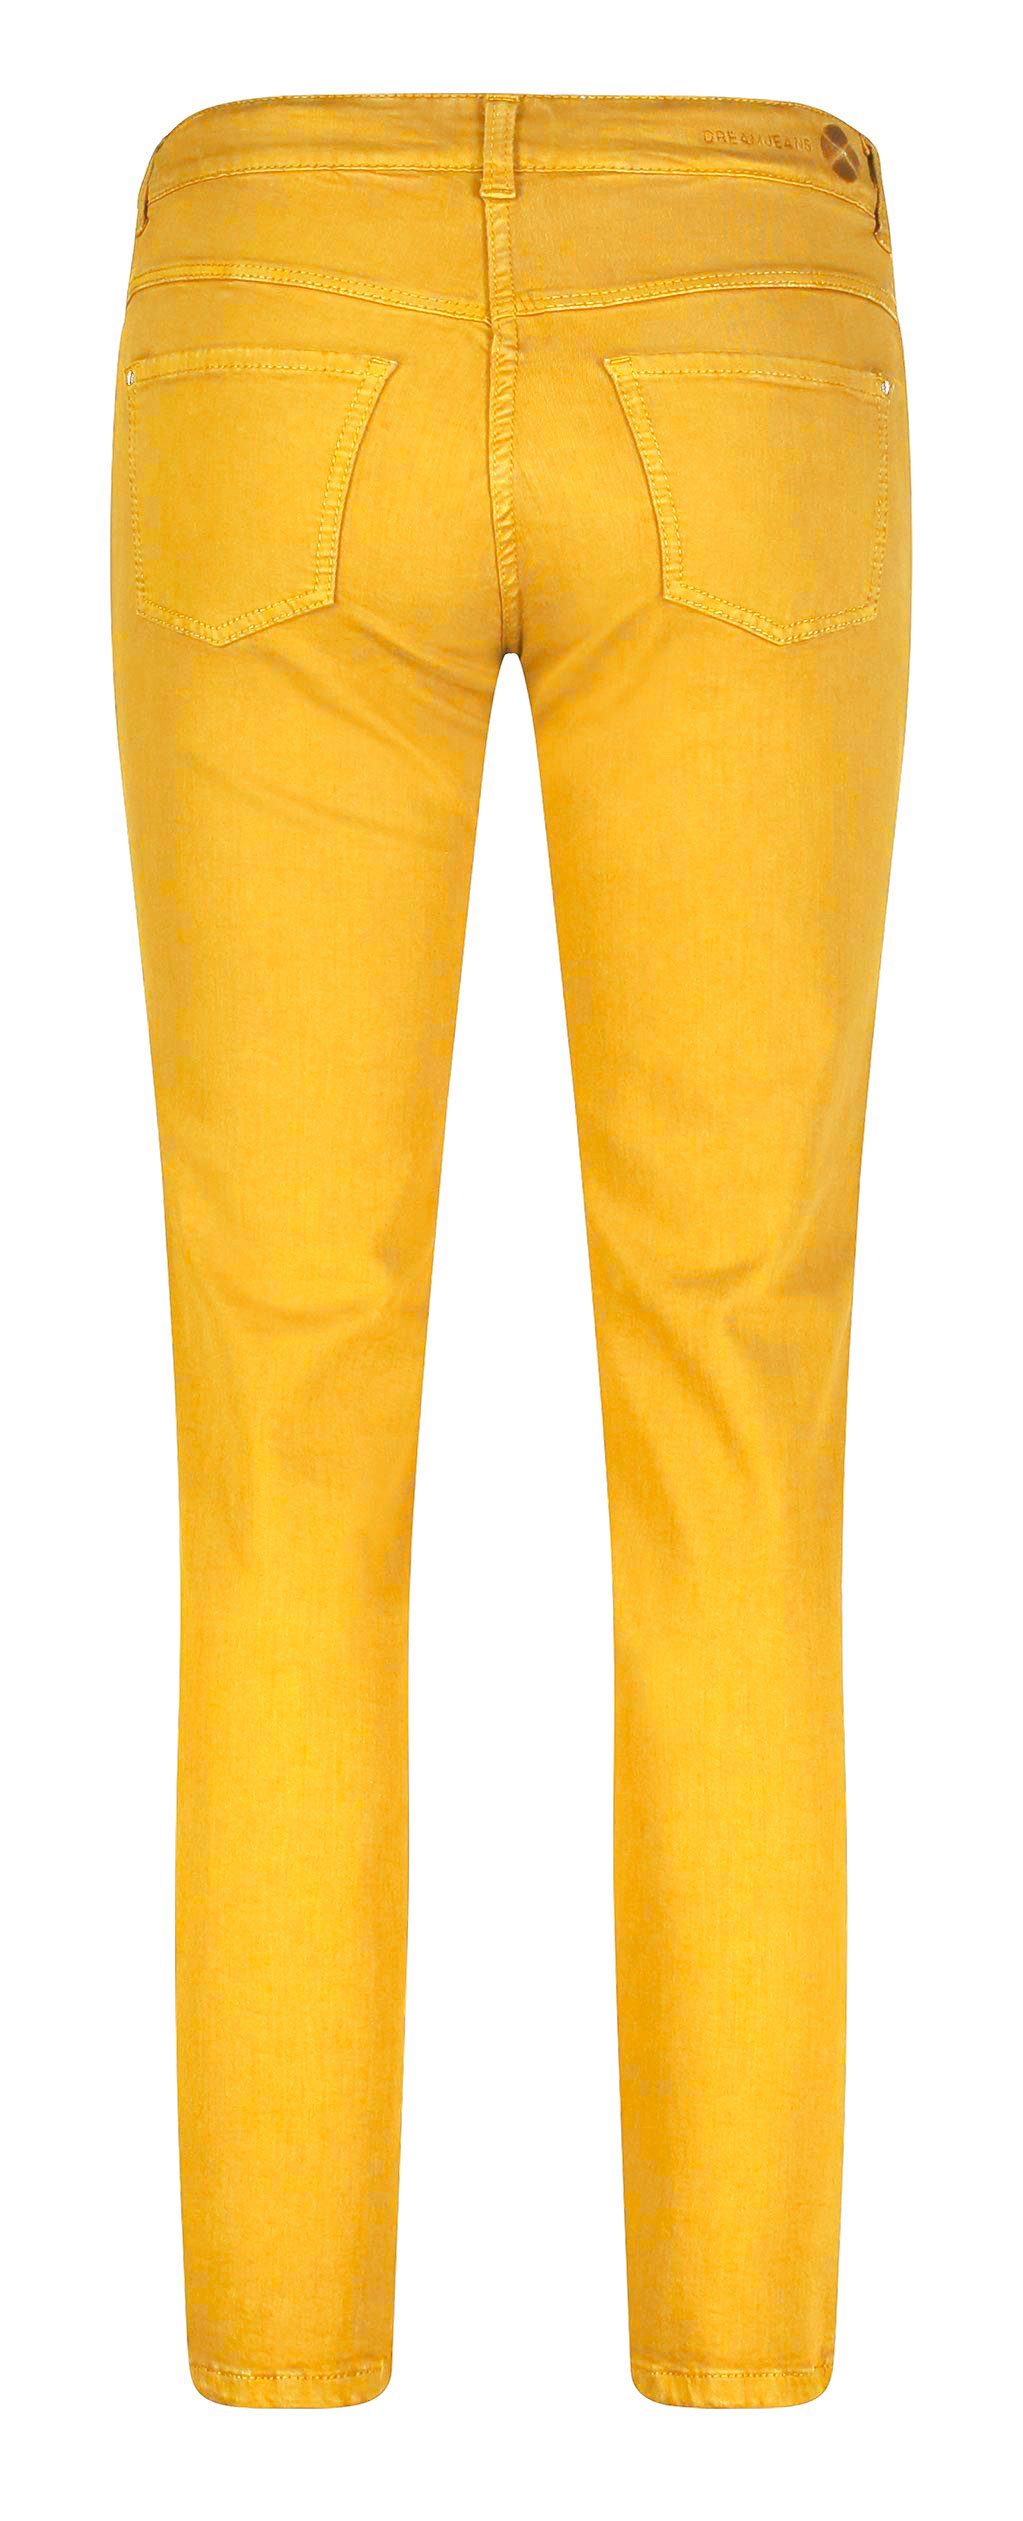 564W Stretch-Jeans 5401-00-0355 MAC green DREAM yellow MAC